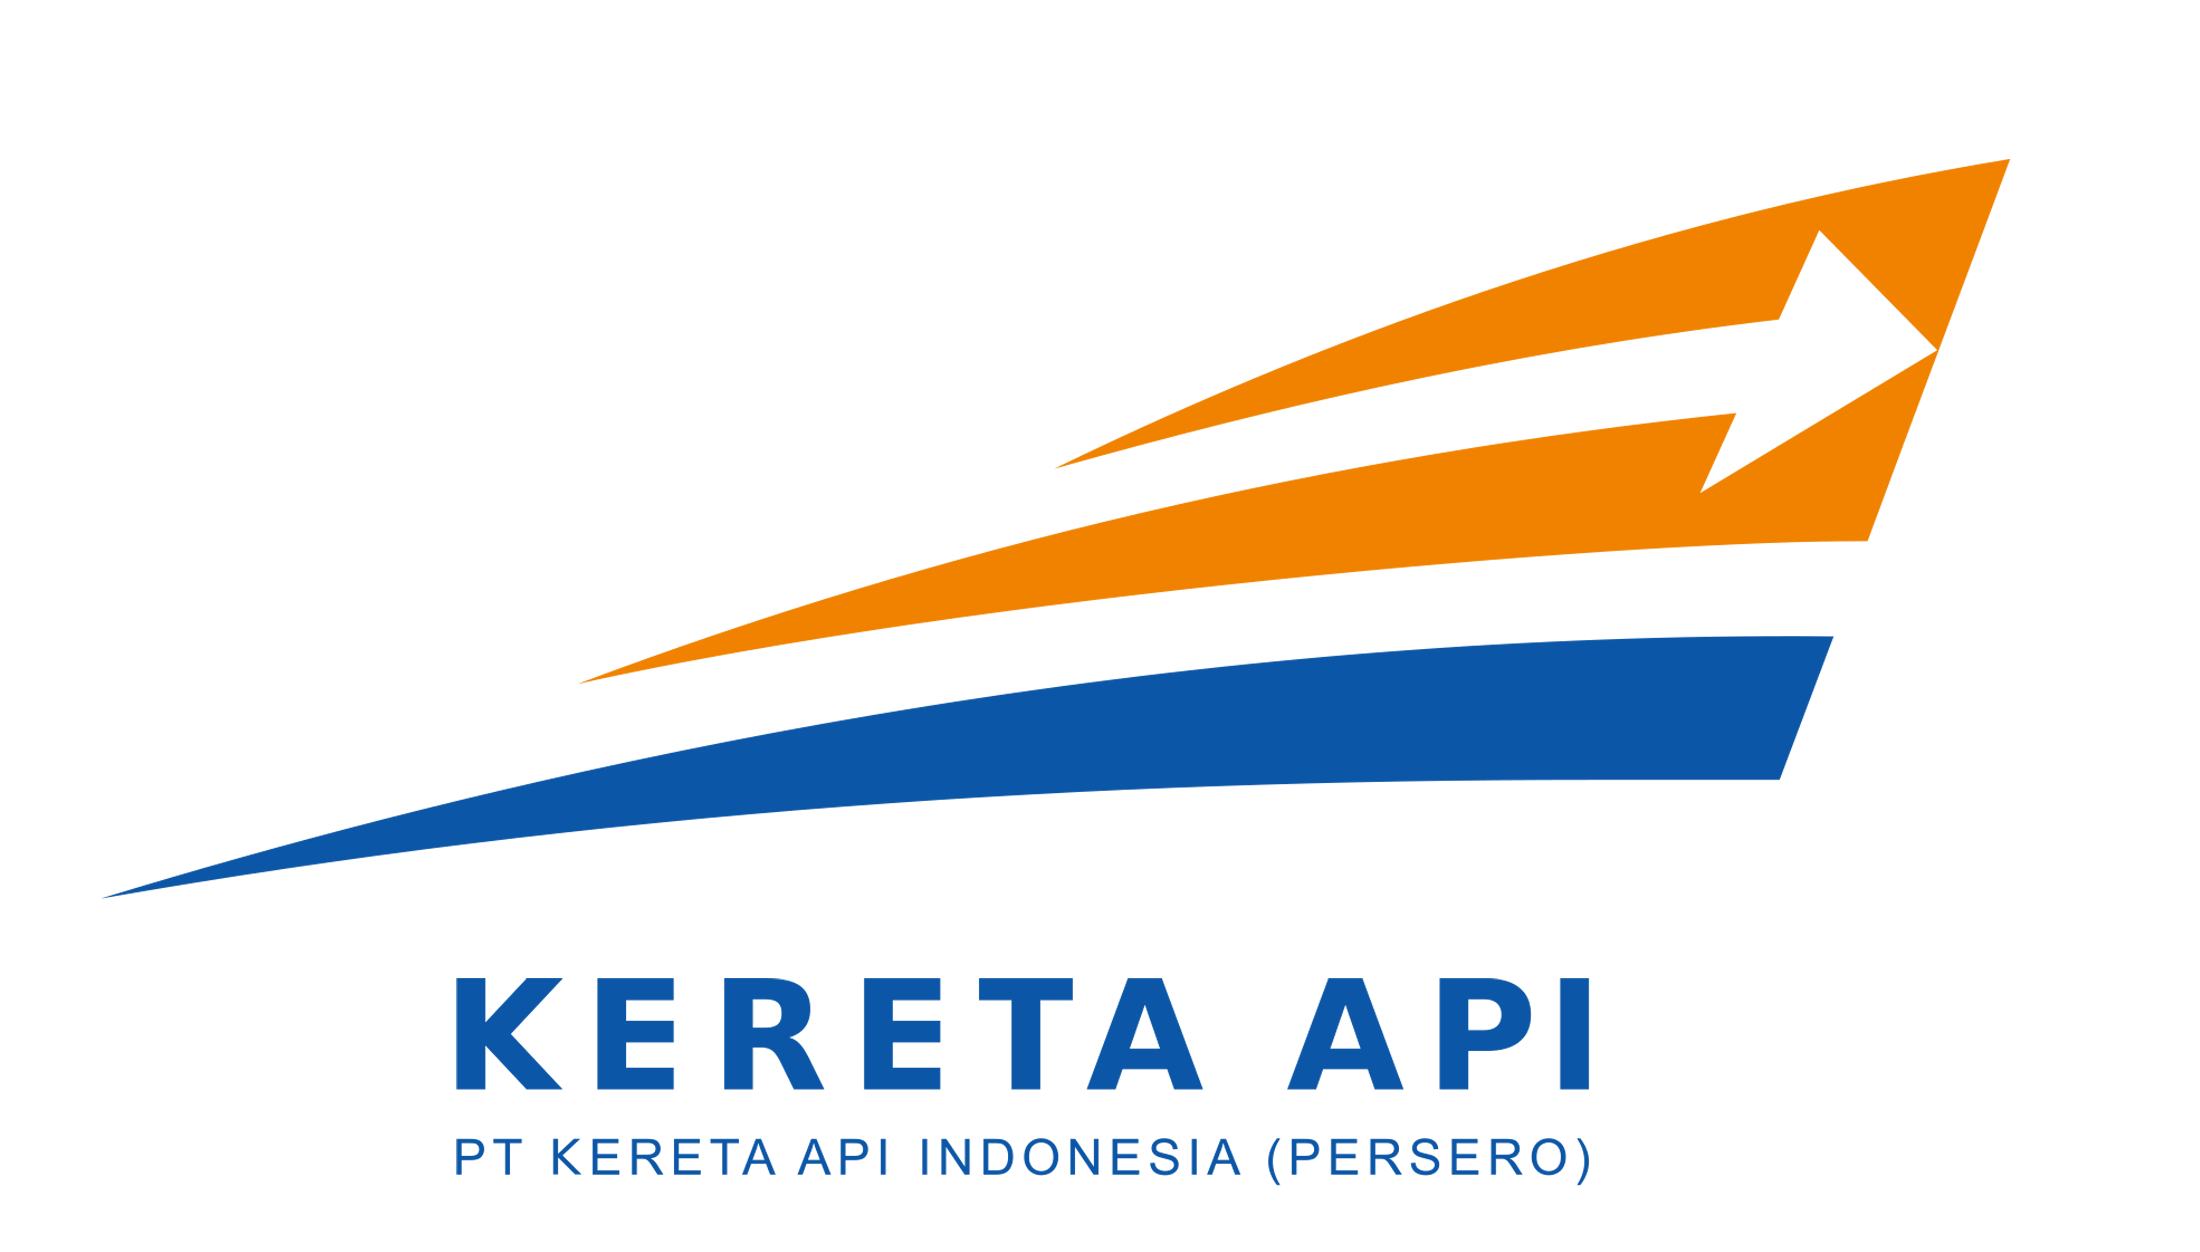 Kai Logo - File:Logo PT Kereta Api Indonesia (Persero).png - Wikimedia Commons